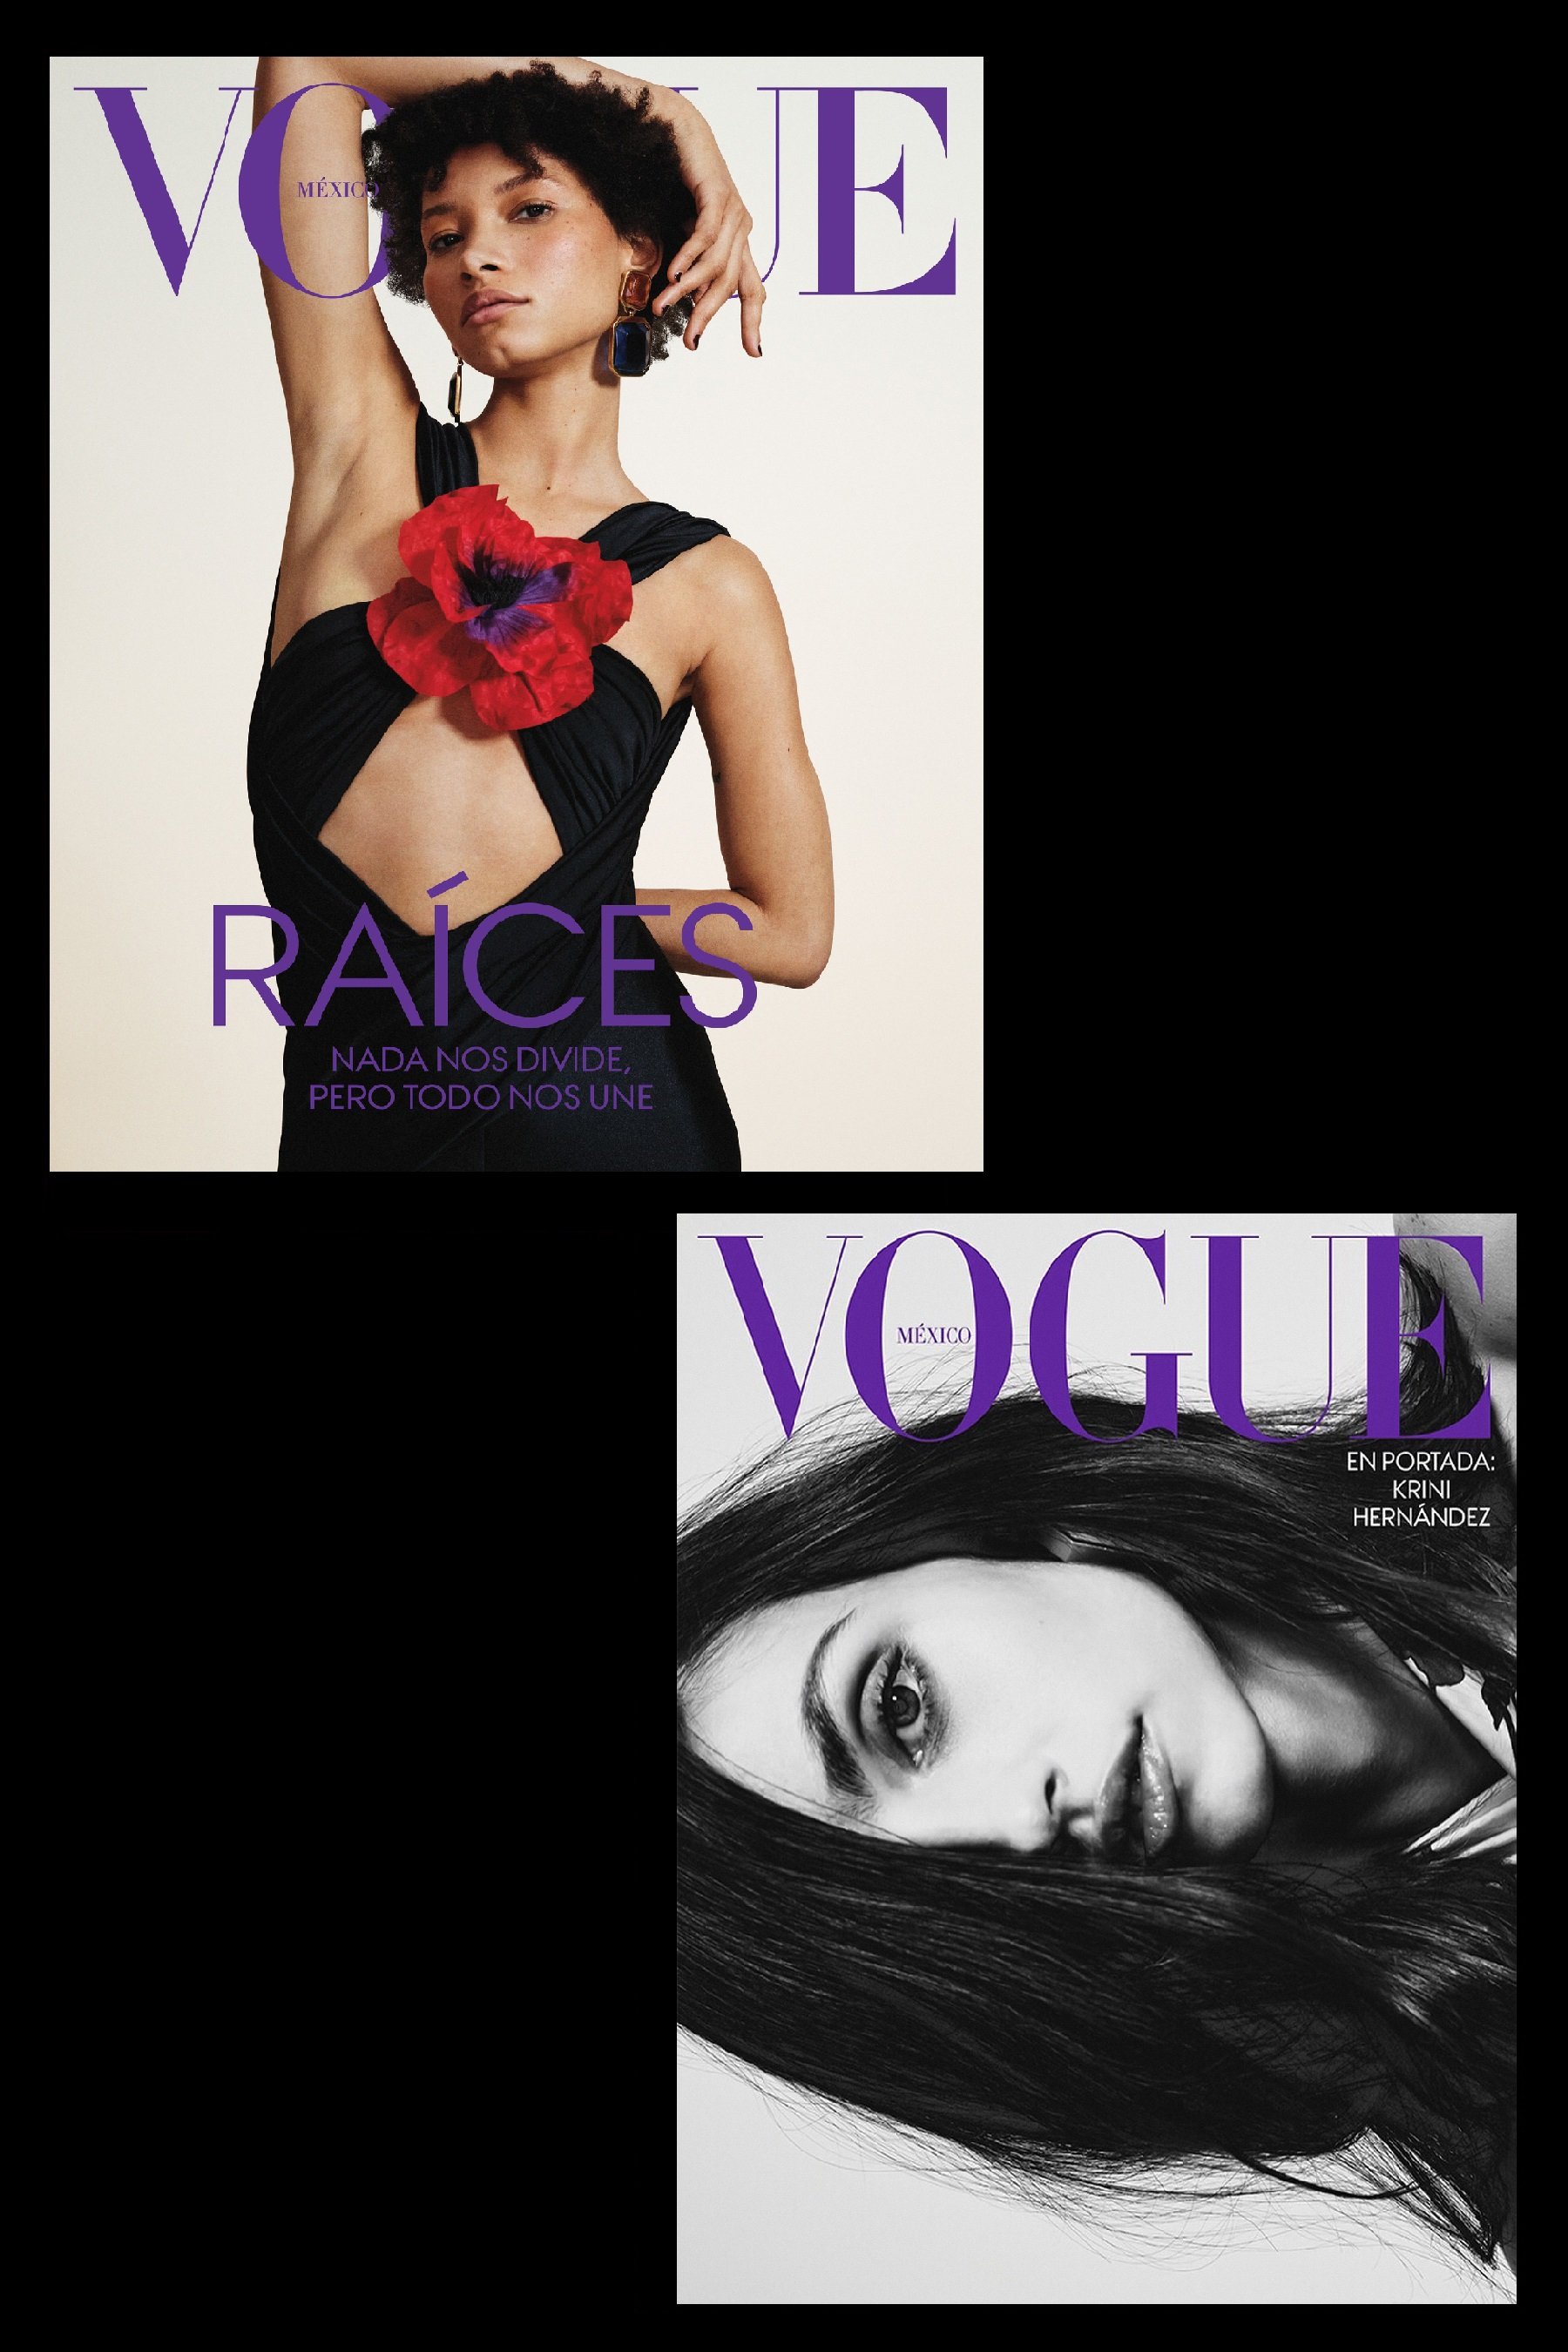 Emma-Summerton-Vogue-Mexico-Latin-America Covers-22.jpg